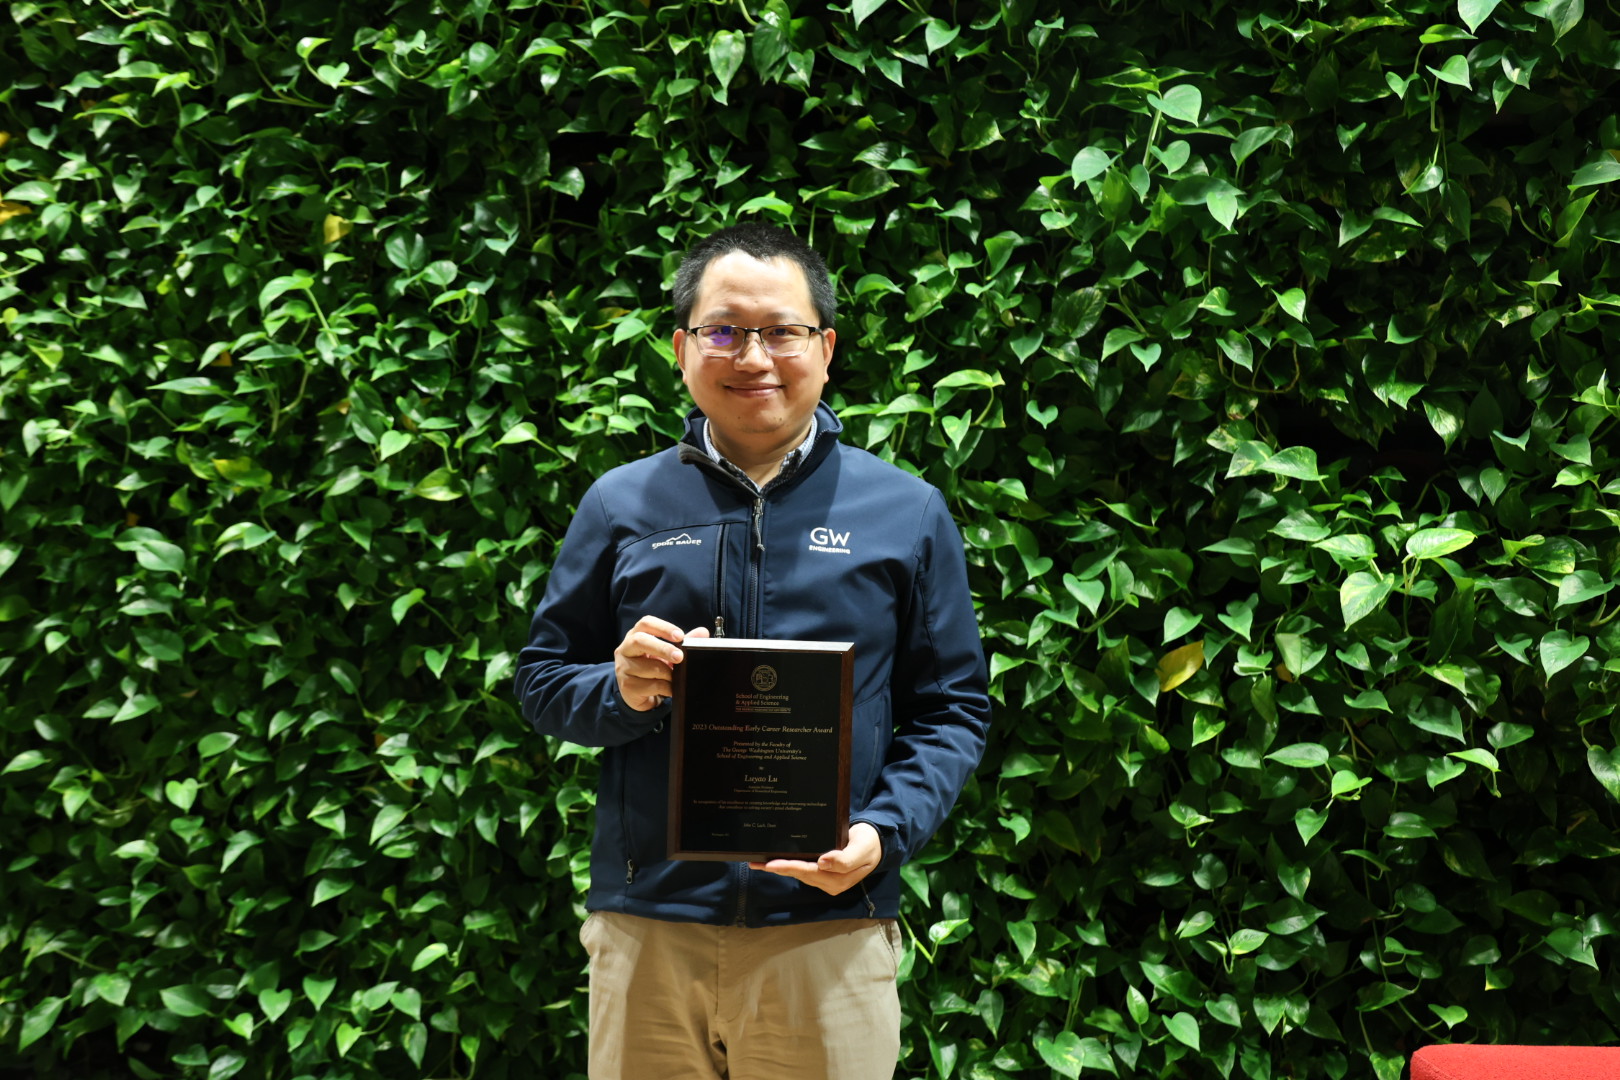 Professor Lu holding his award plaque